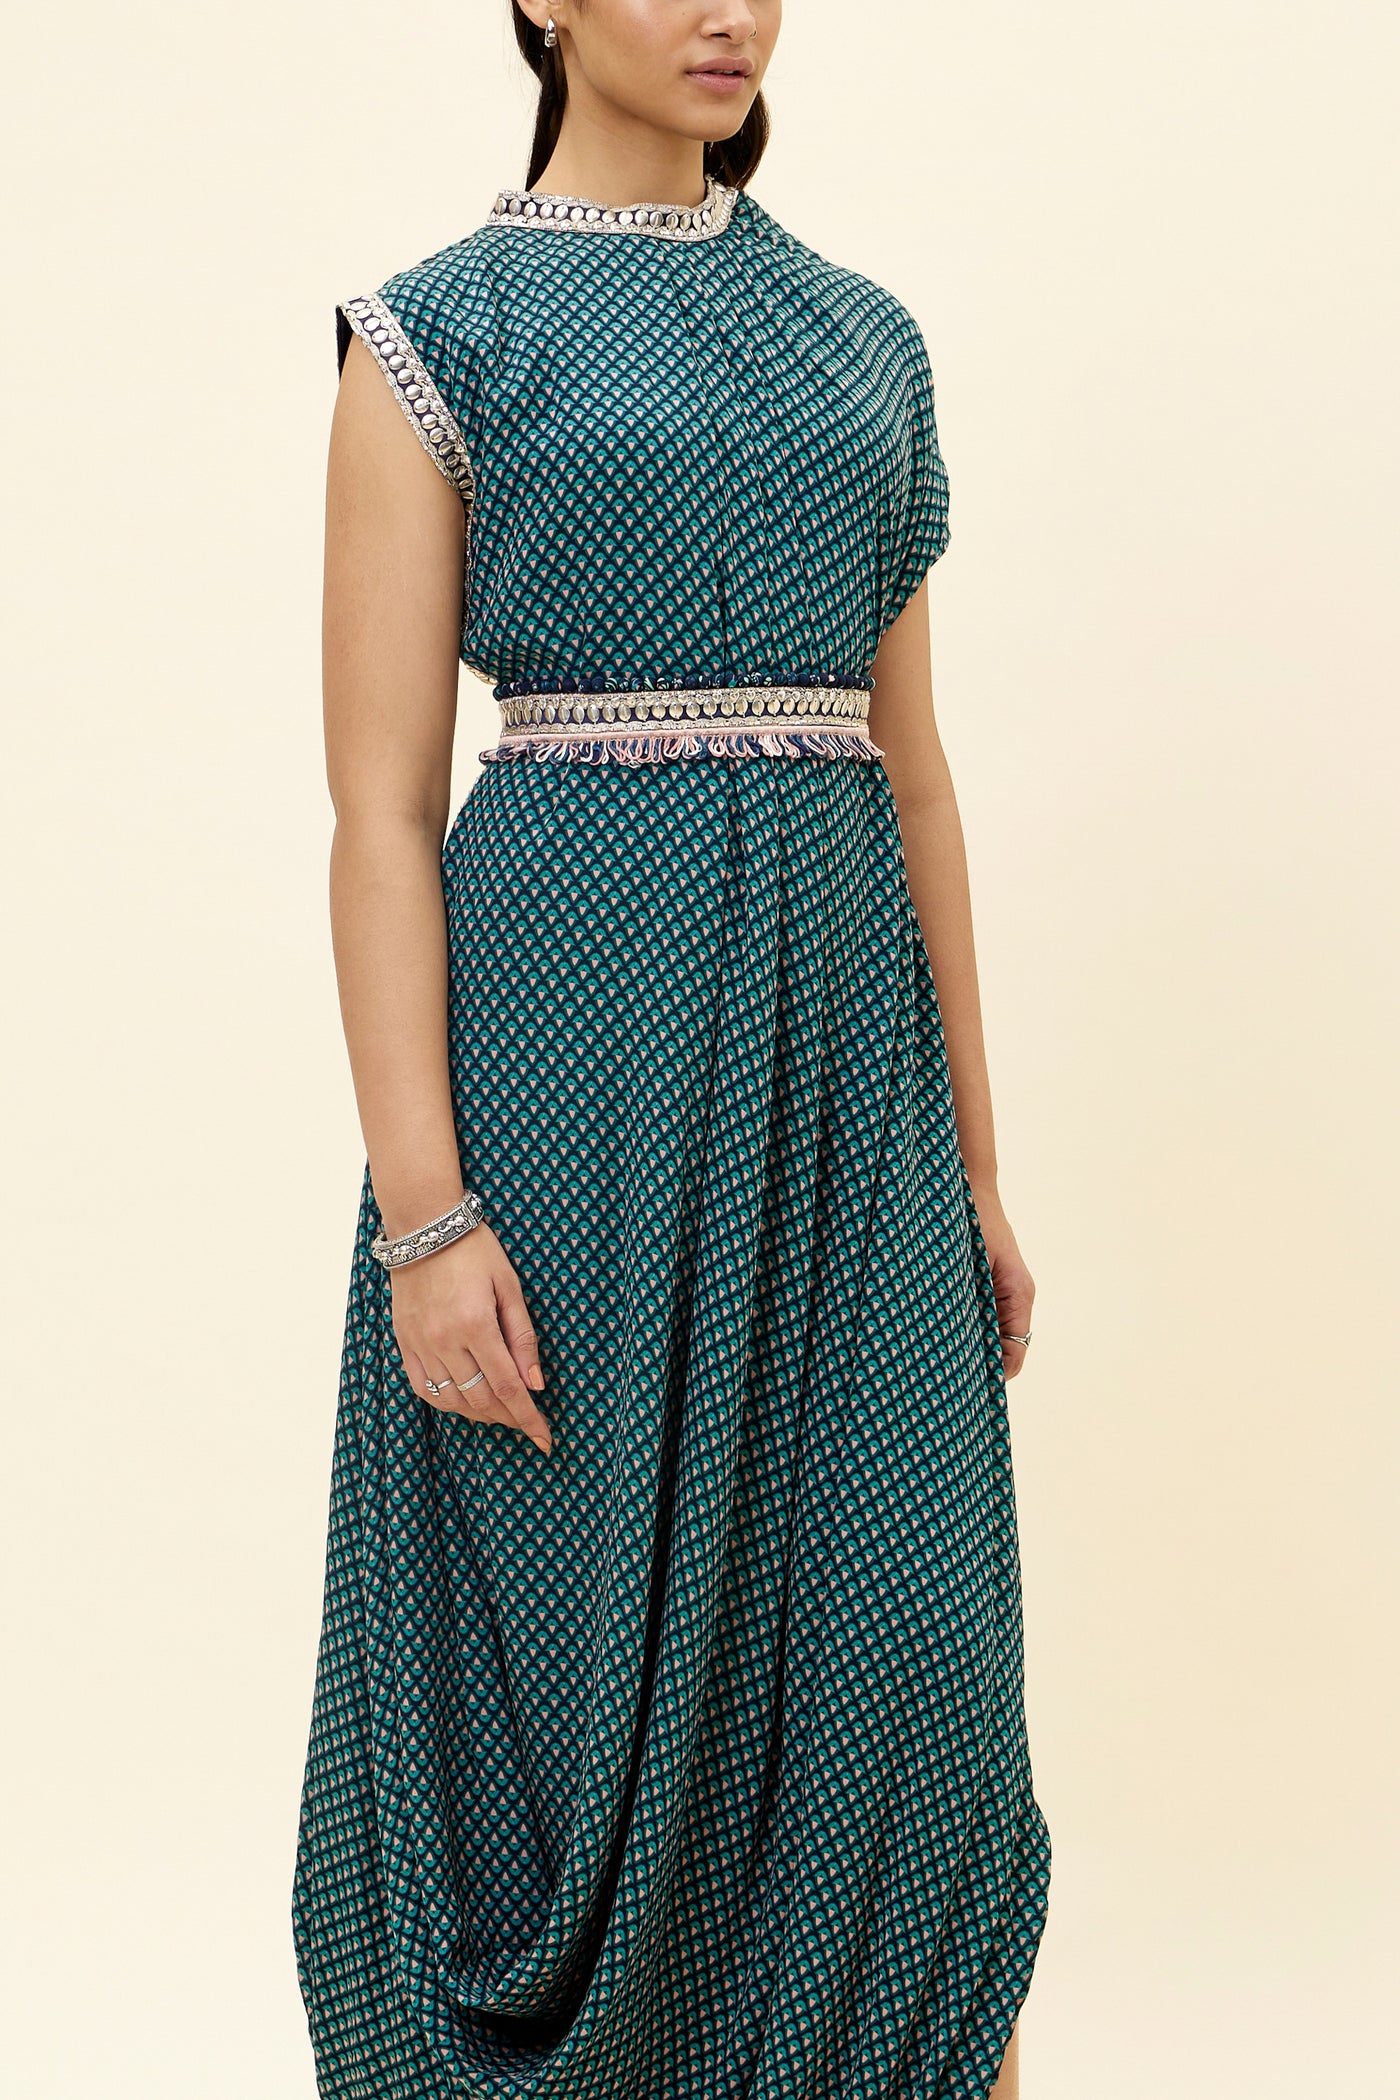 sva Blue Butti Print Drape Dress With Emb Belt online shopping melange singapore indian designer wear